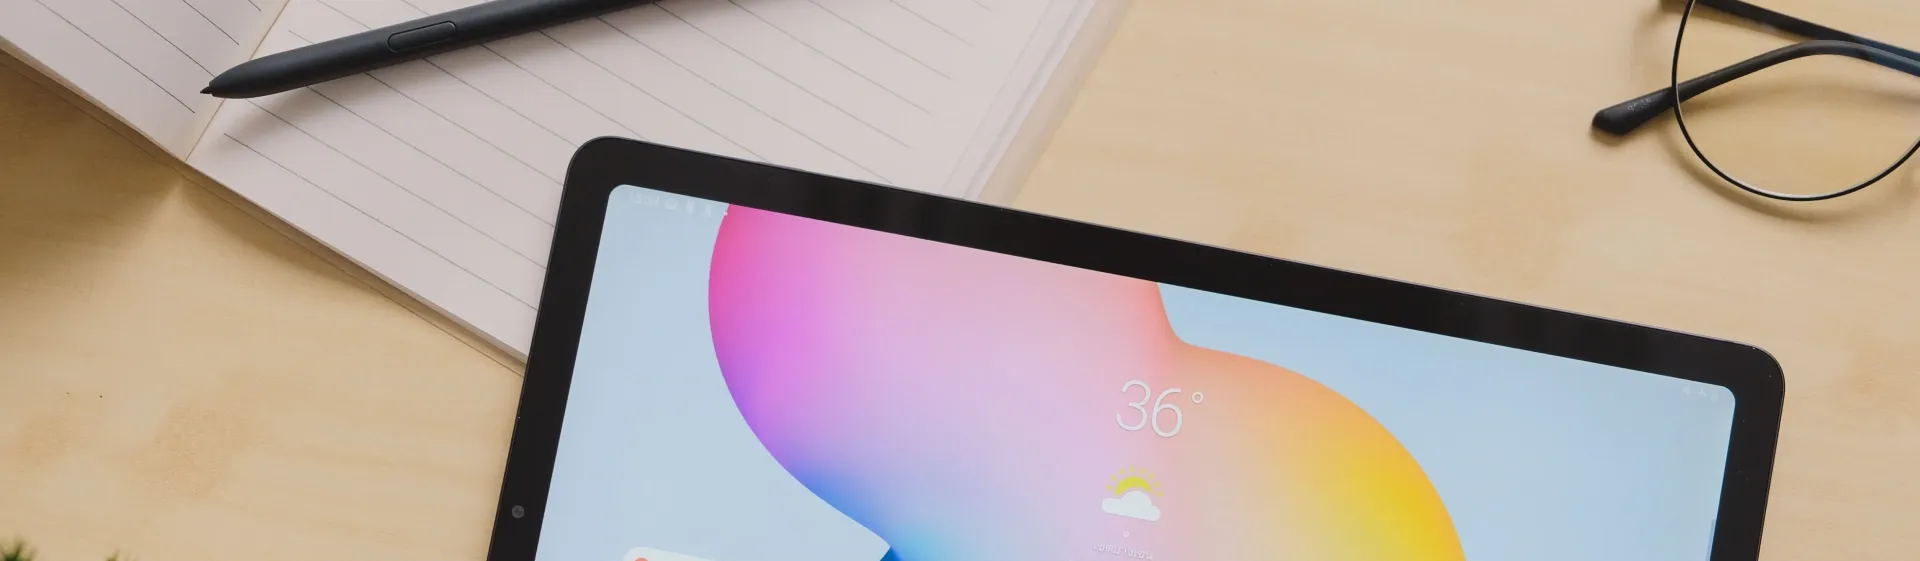 Galaxy Tab S6 Lite: testamos o tablet Samsung com caneta eletrônica